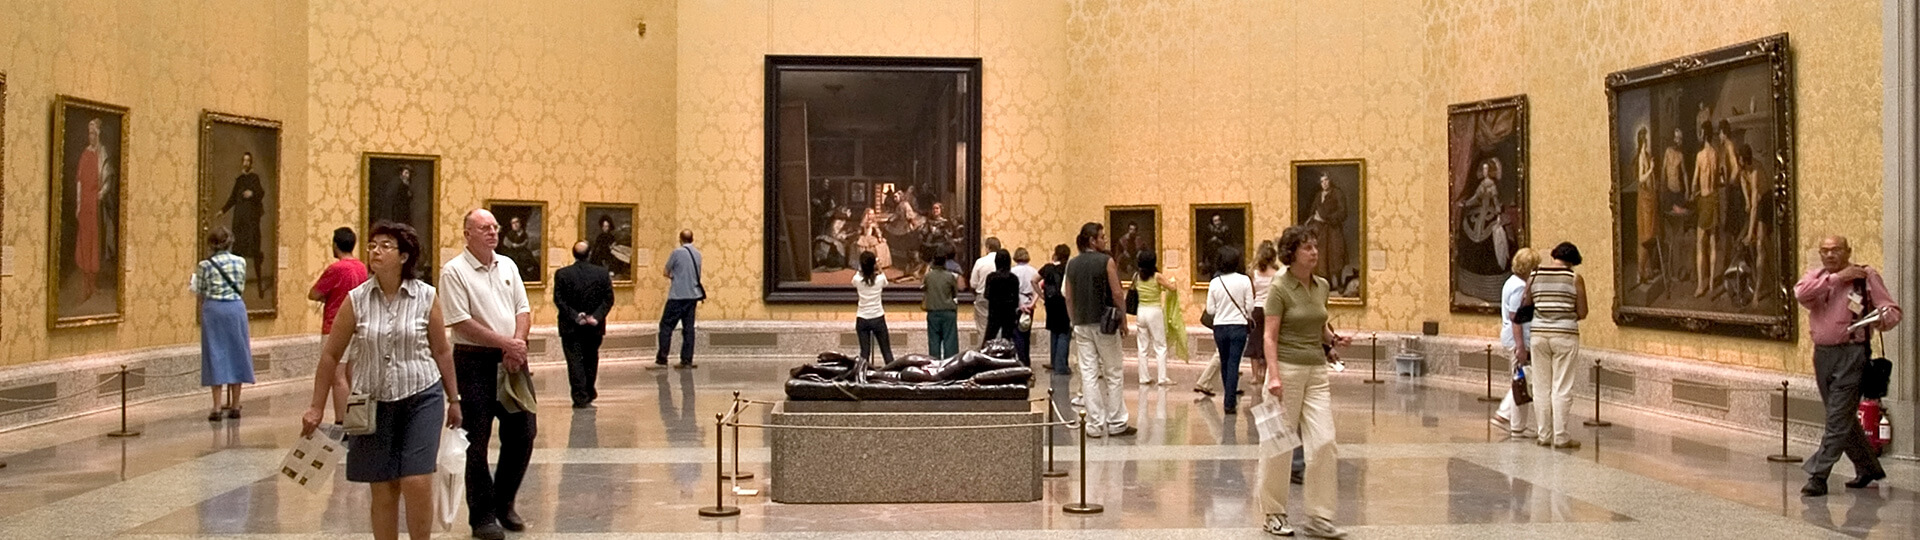 Velázquez gallery in the Prado Museum Madrid